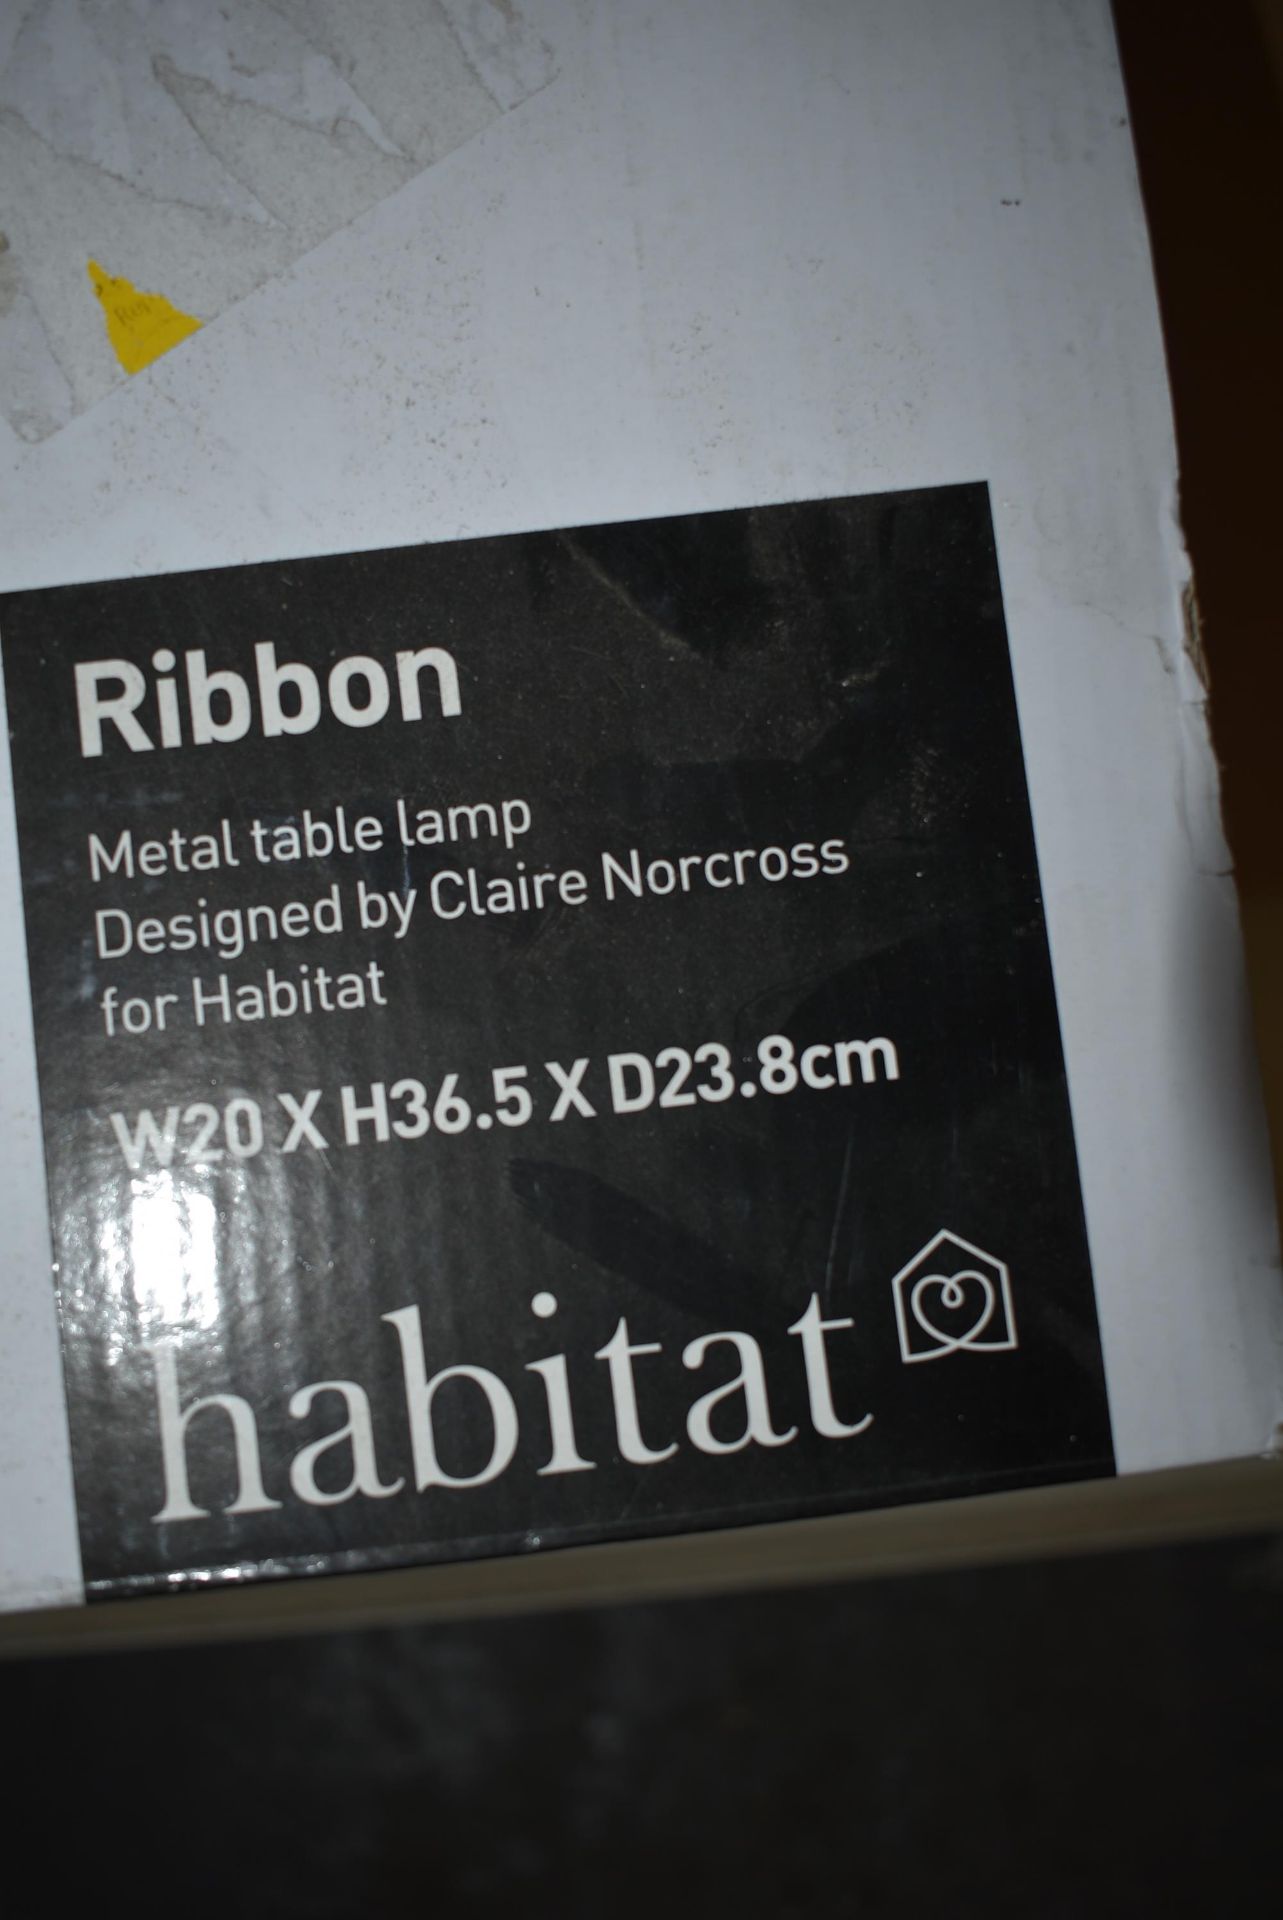 Habitat Ribbon Table Lamp - Image 3 of 4